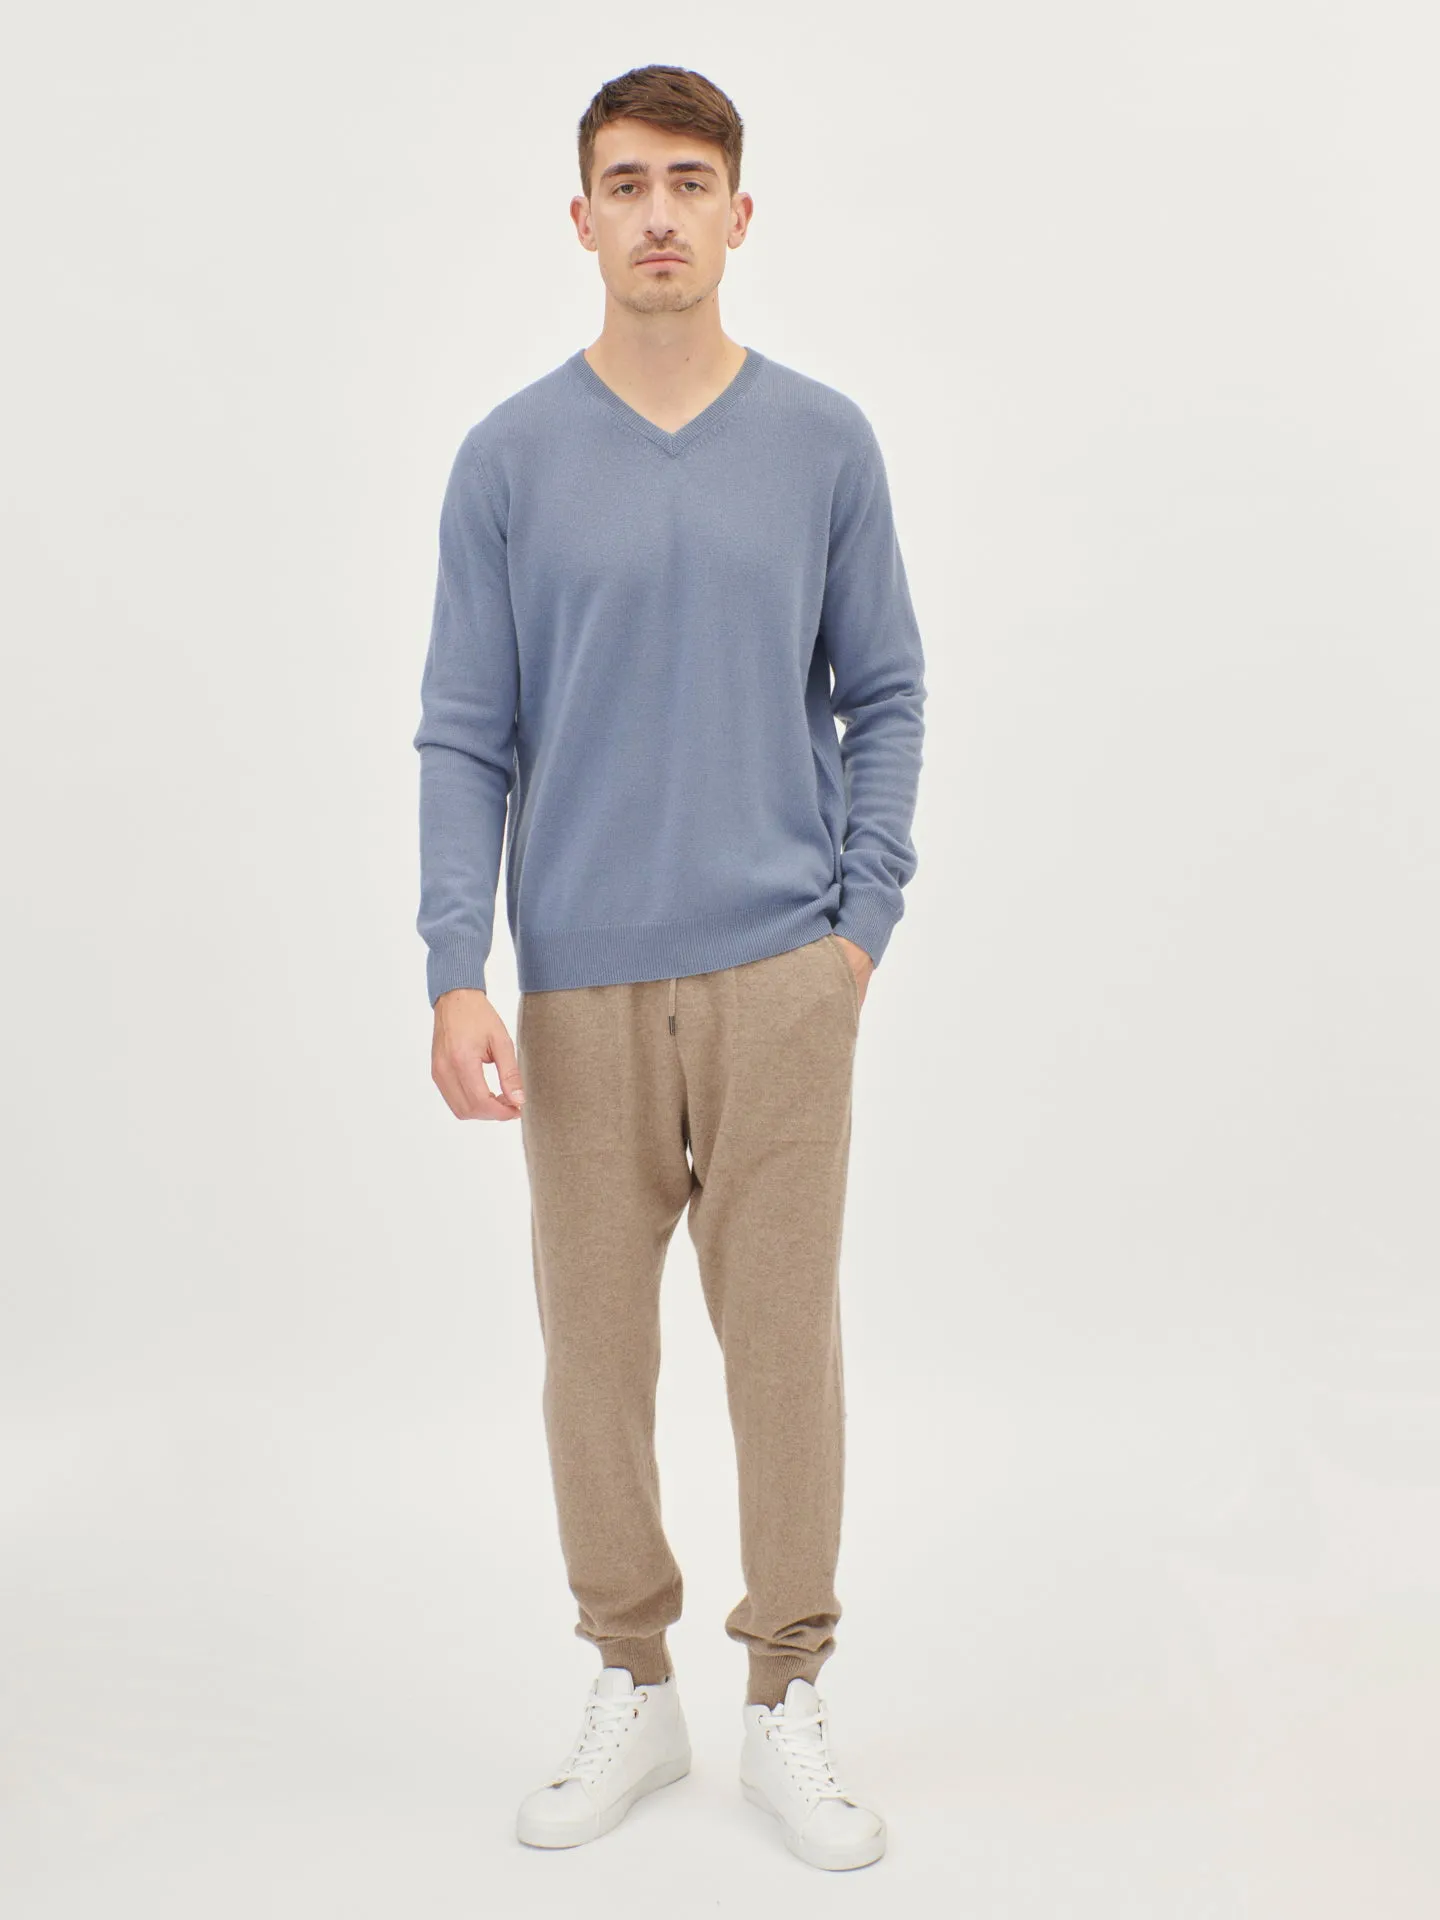 Men's Cashmere Basic V-Neck Sweater Purple Impression - Gobi Cashmere